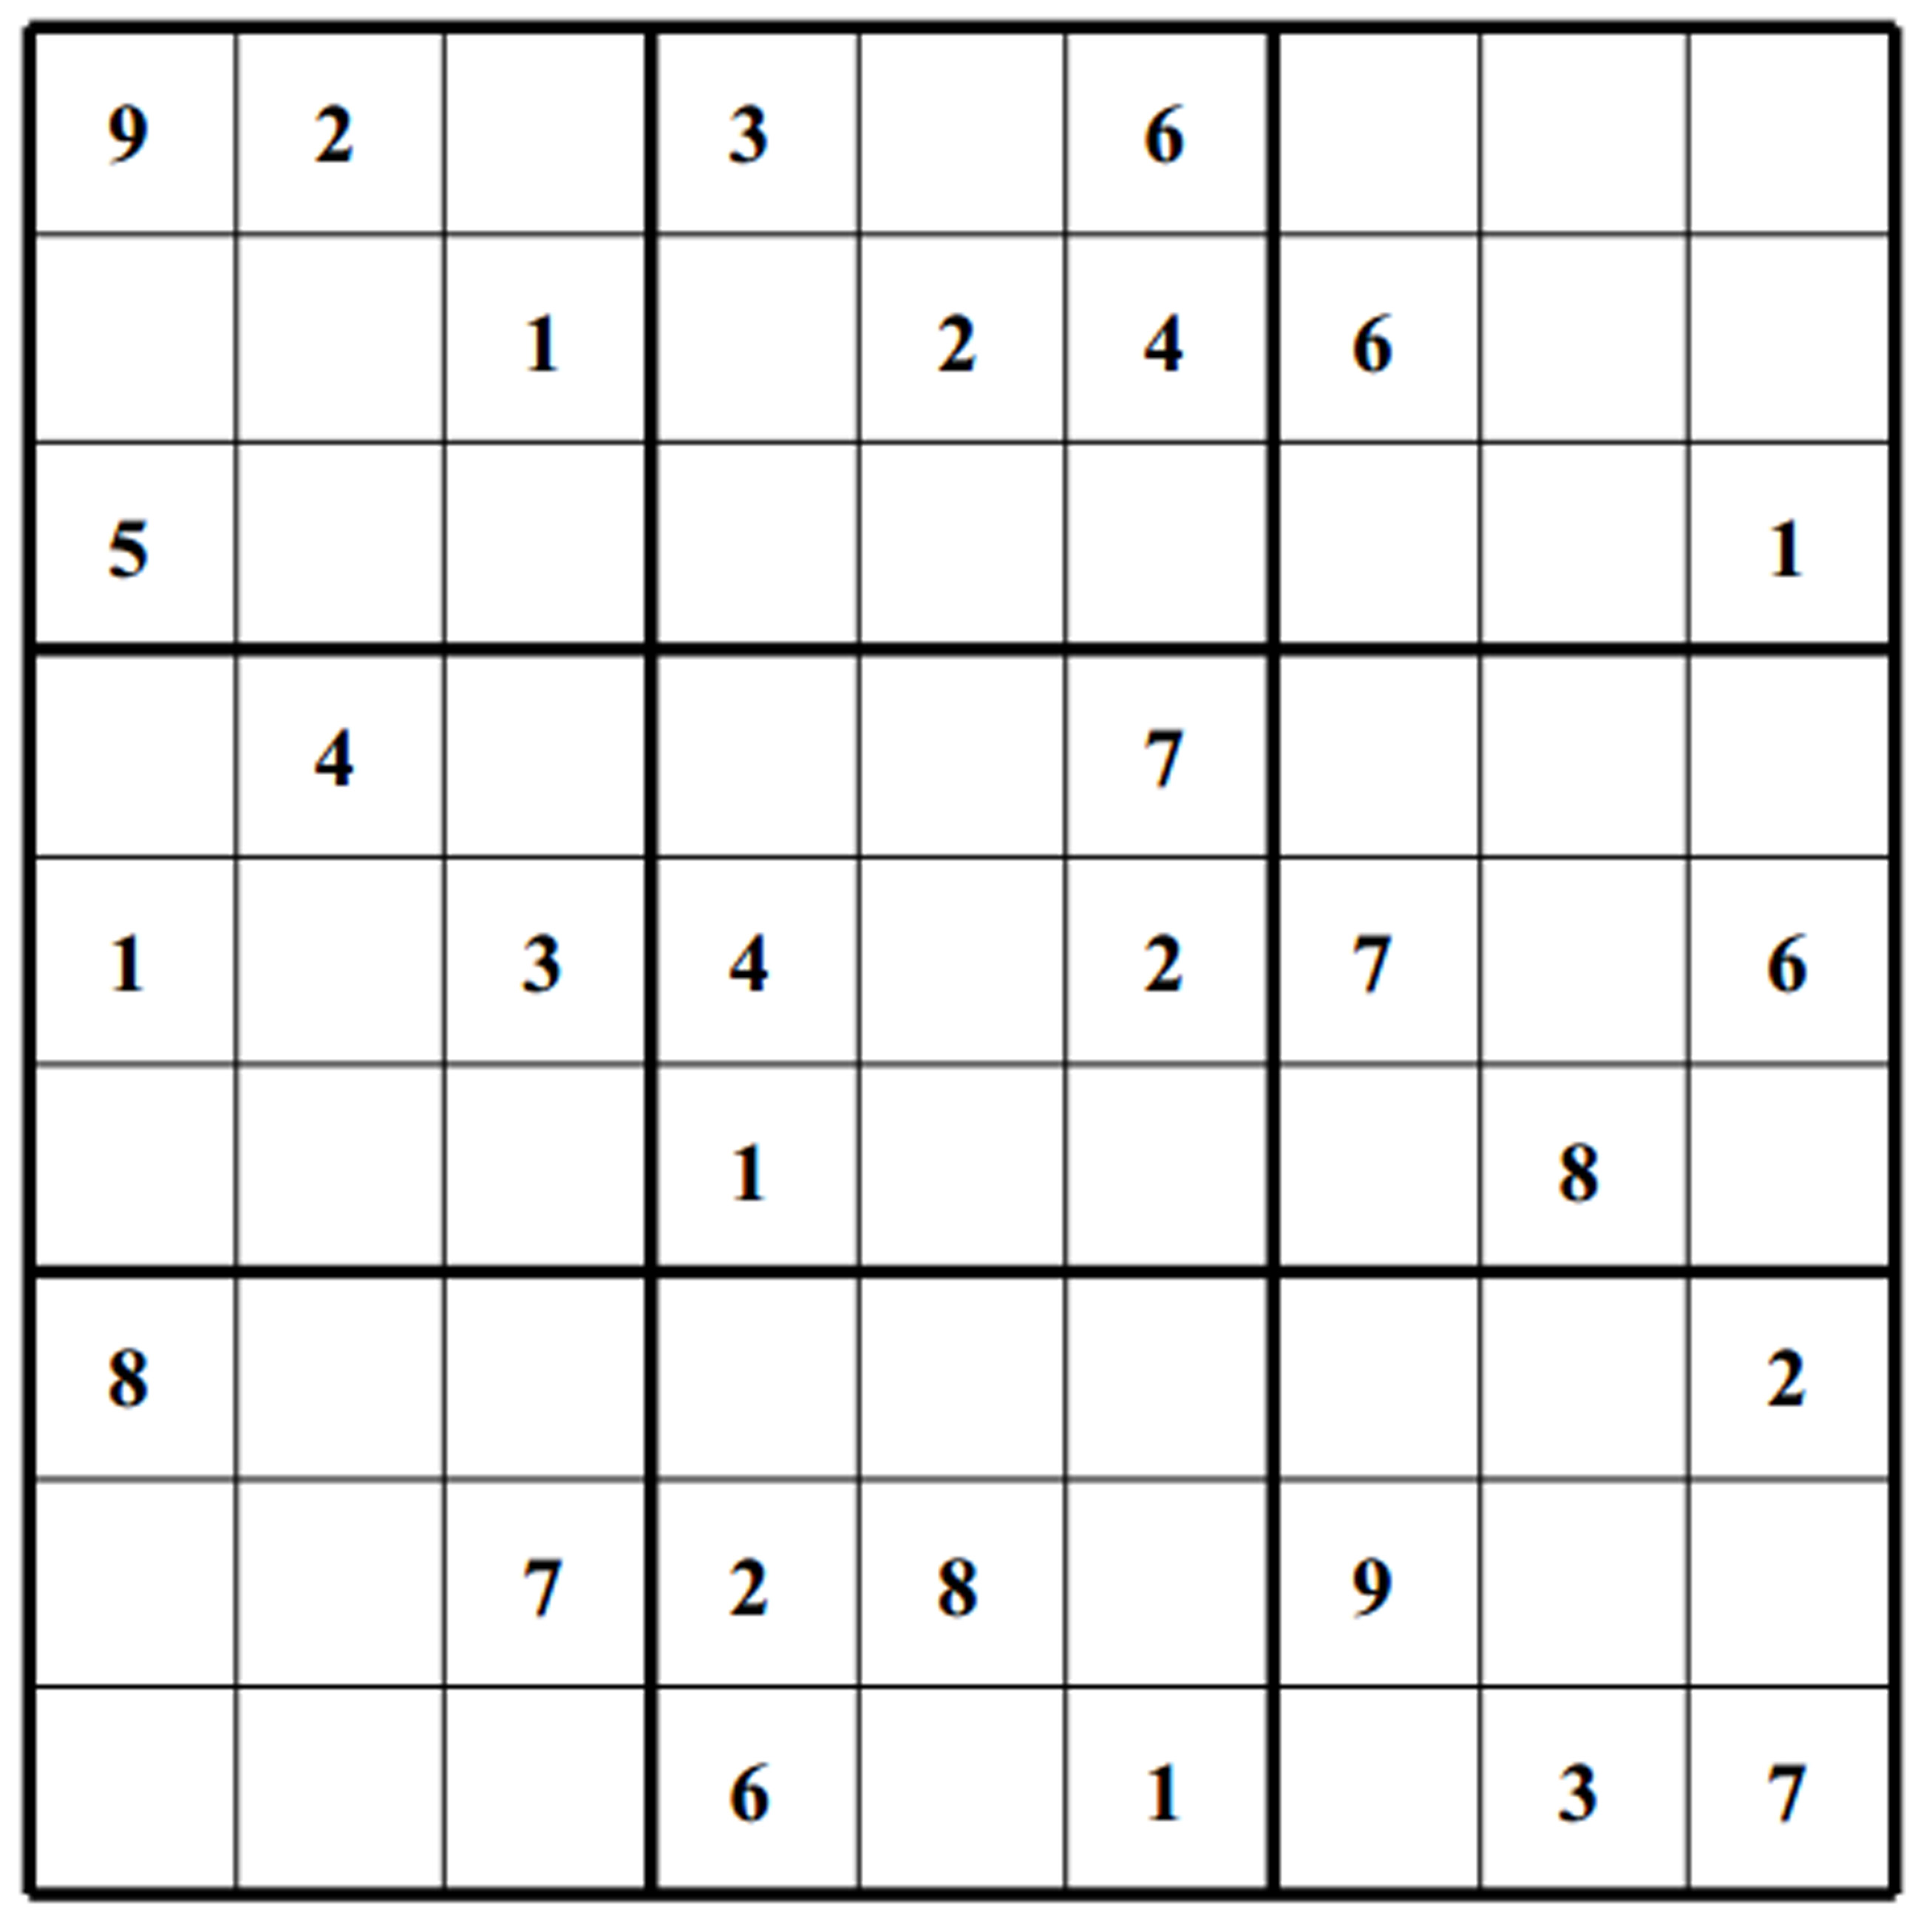 FREE SUDOKU PUZZLE: HARD 012 Free Sudoku Puzzles